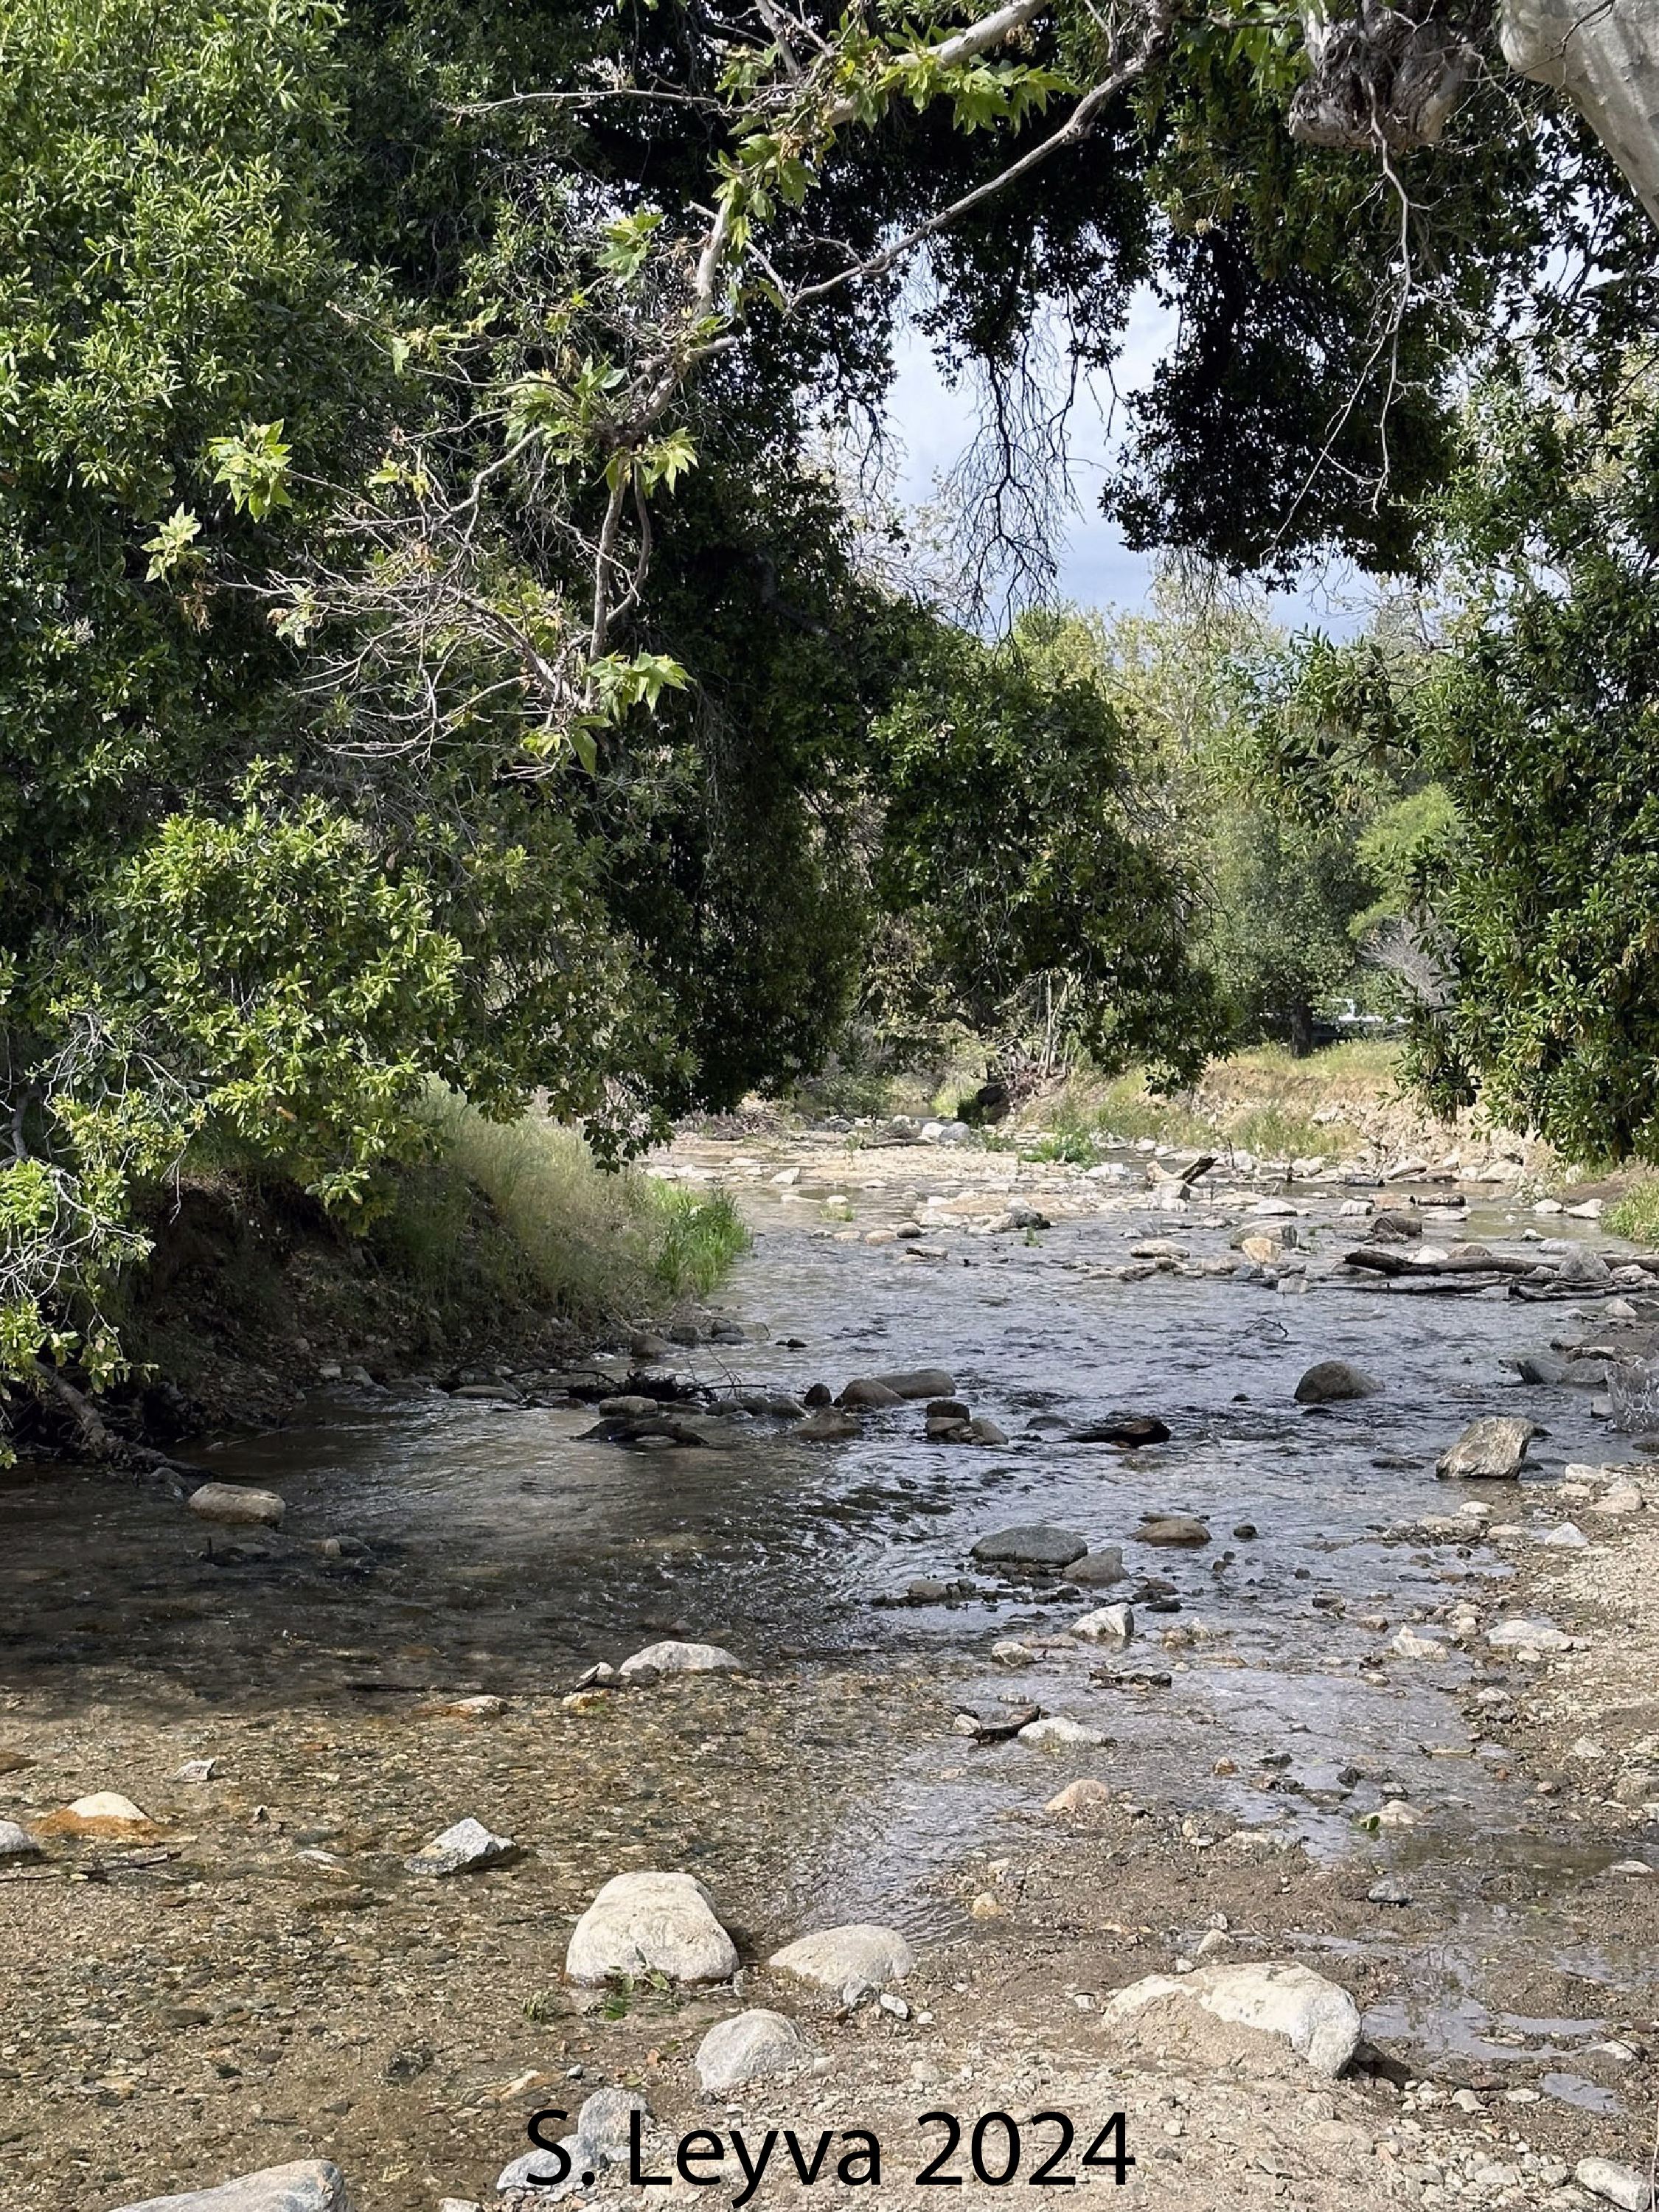 Image showing Placerita Creek (looking downstream)